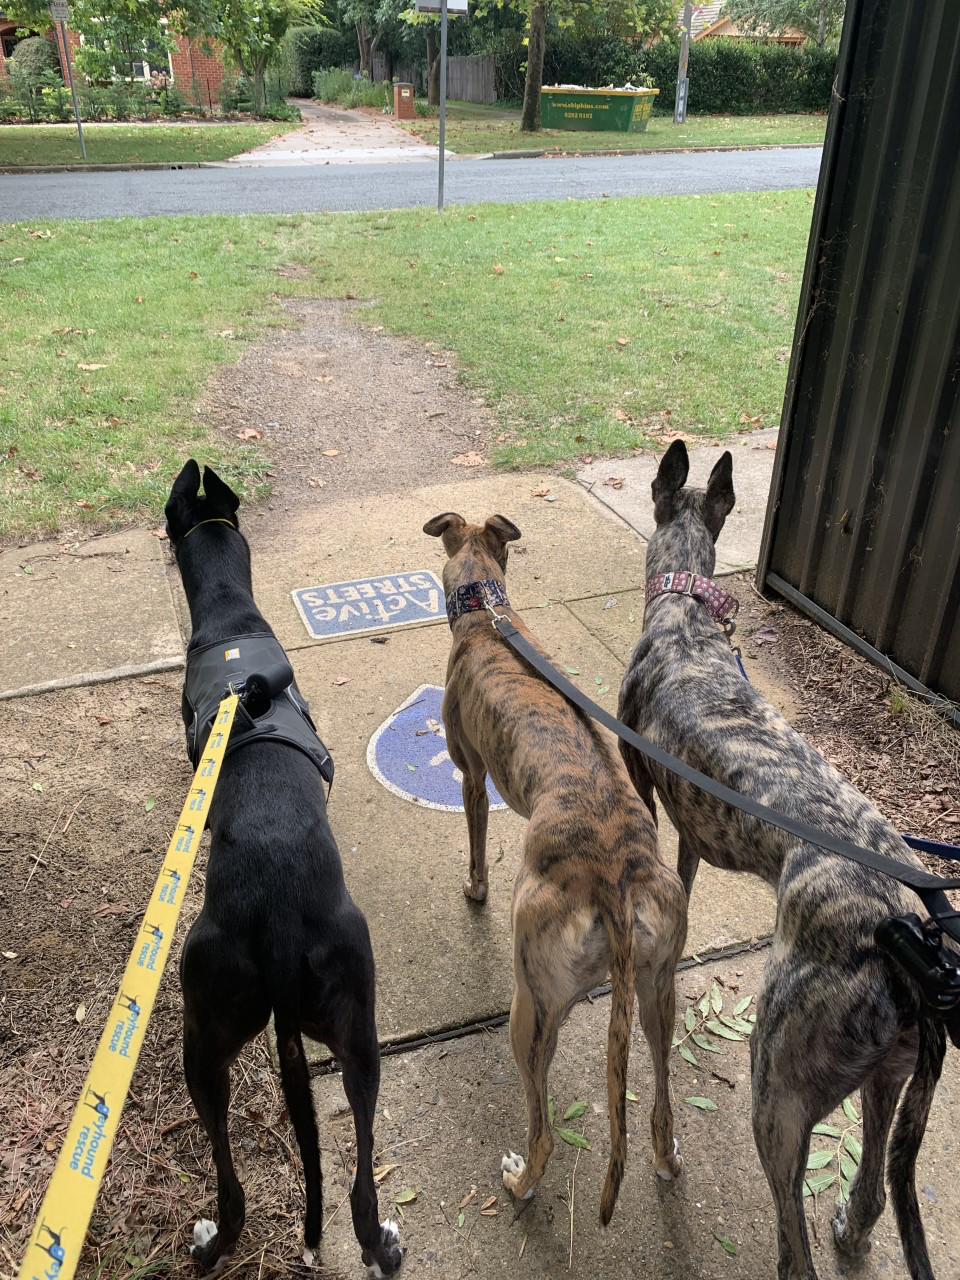 Hardy the black greyhound walks with friends